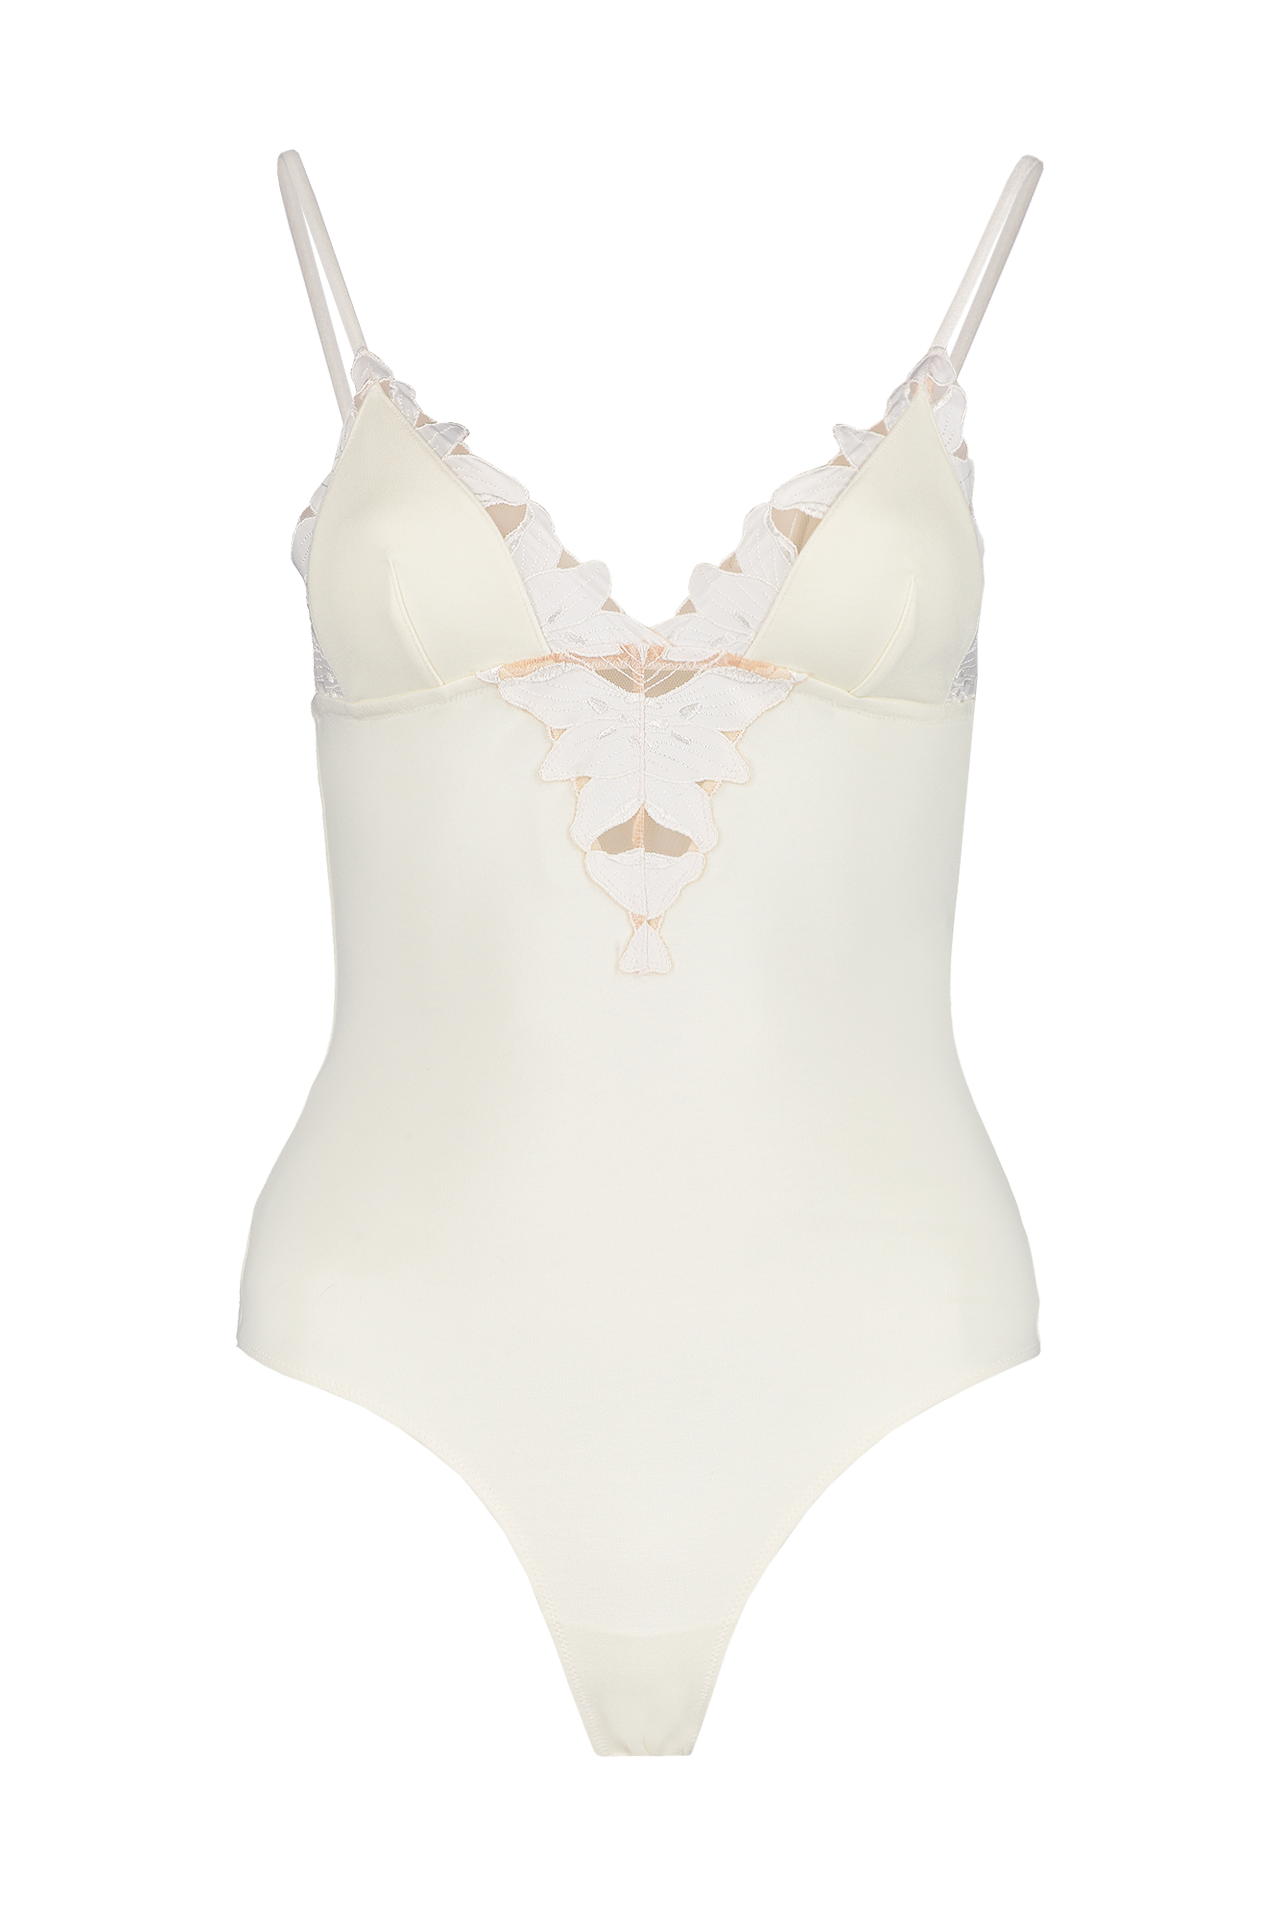 Fleur Du Mal Lily Lace V-Neck Bodysuit White Front Mannequin Image (6614098935923)